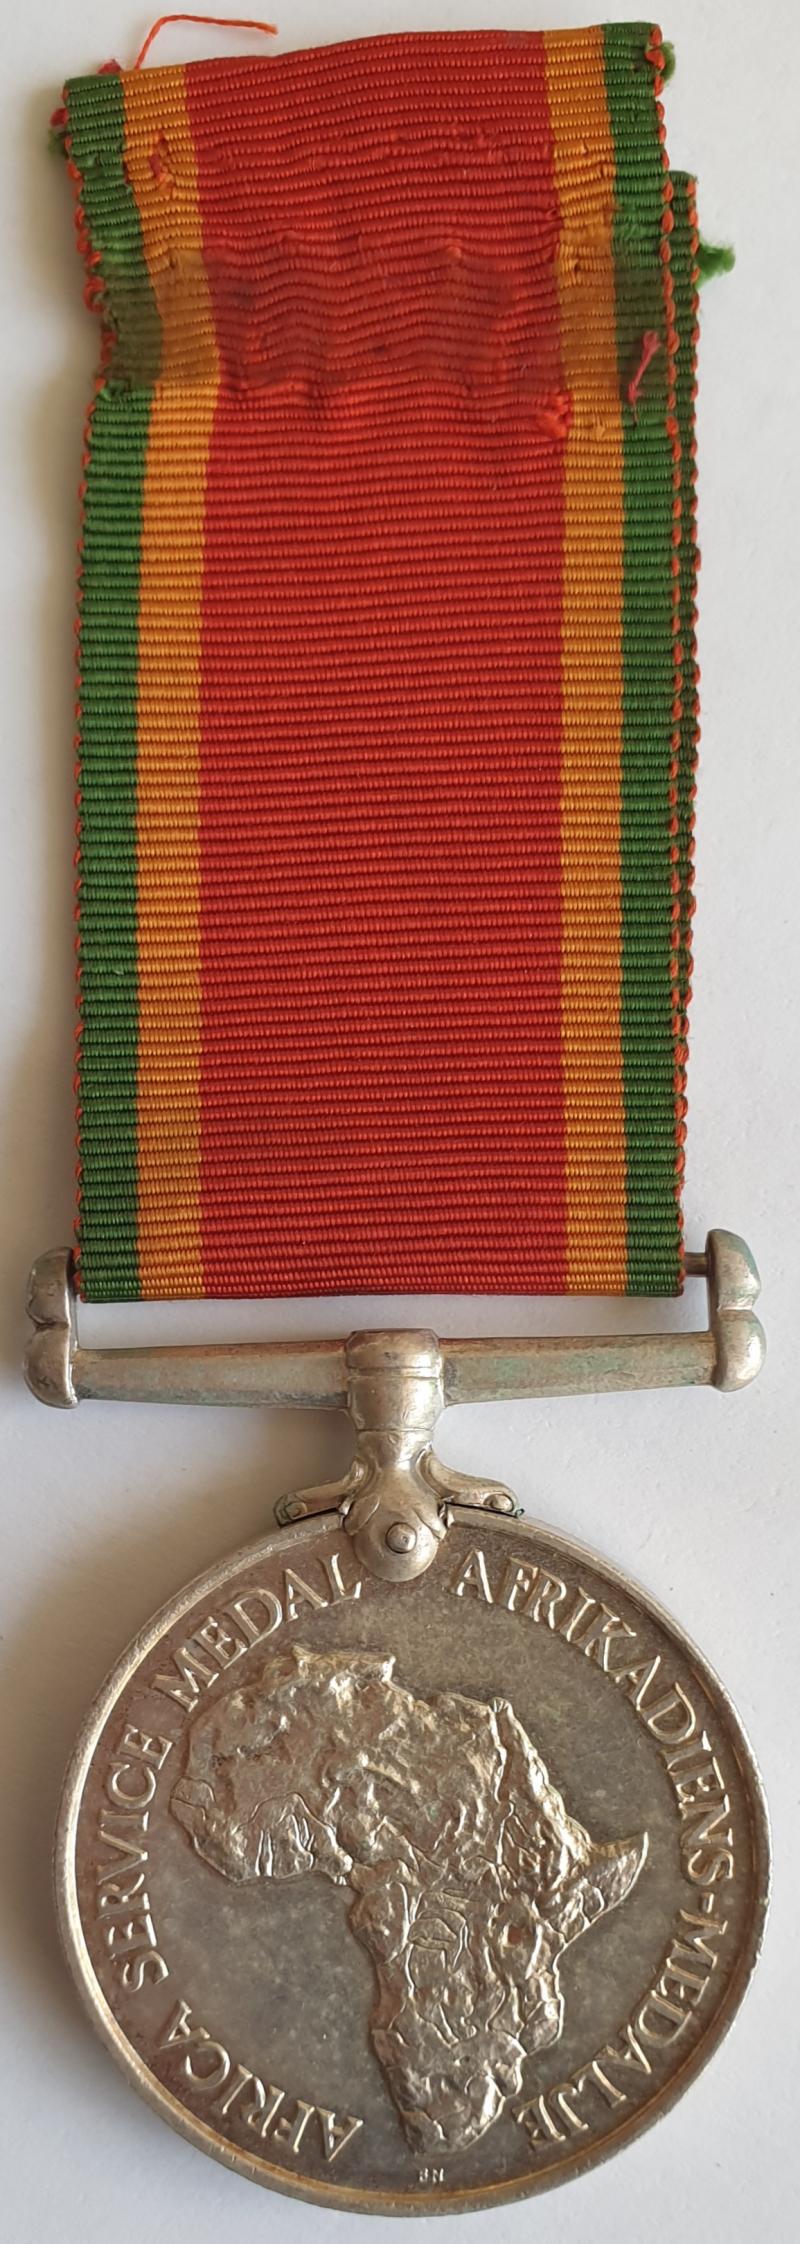 Africa Service Medal - Afrika Diens Medalje - Named T. C. Baker